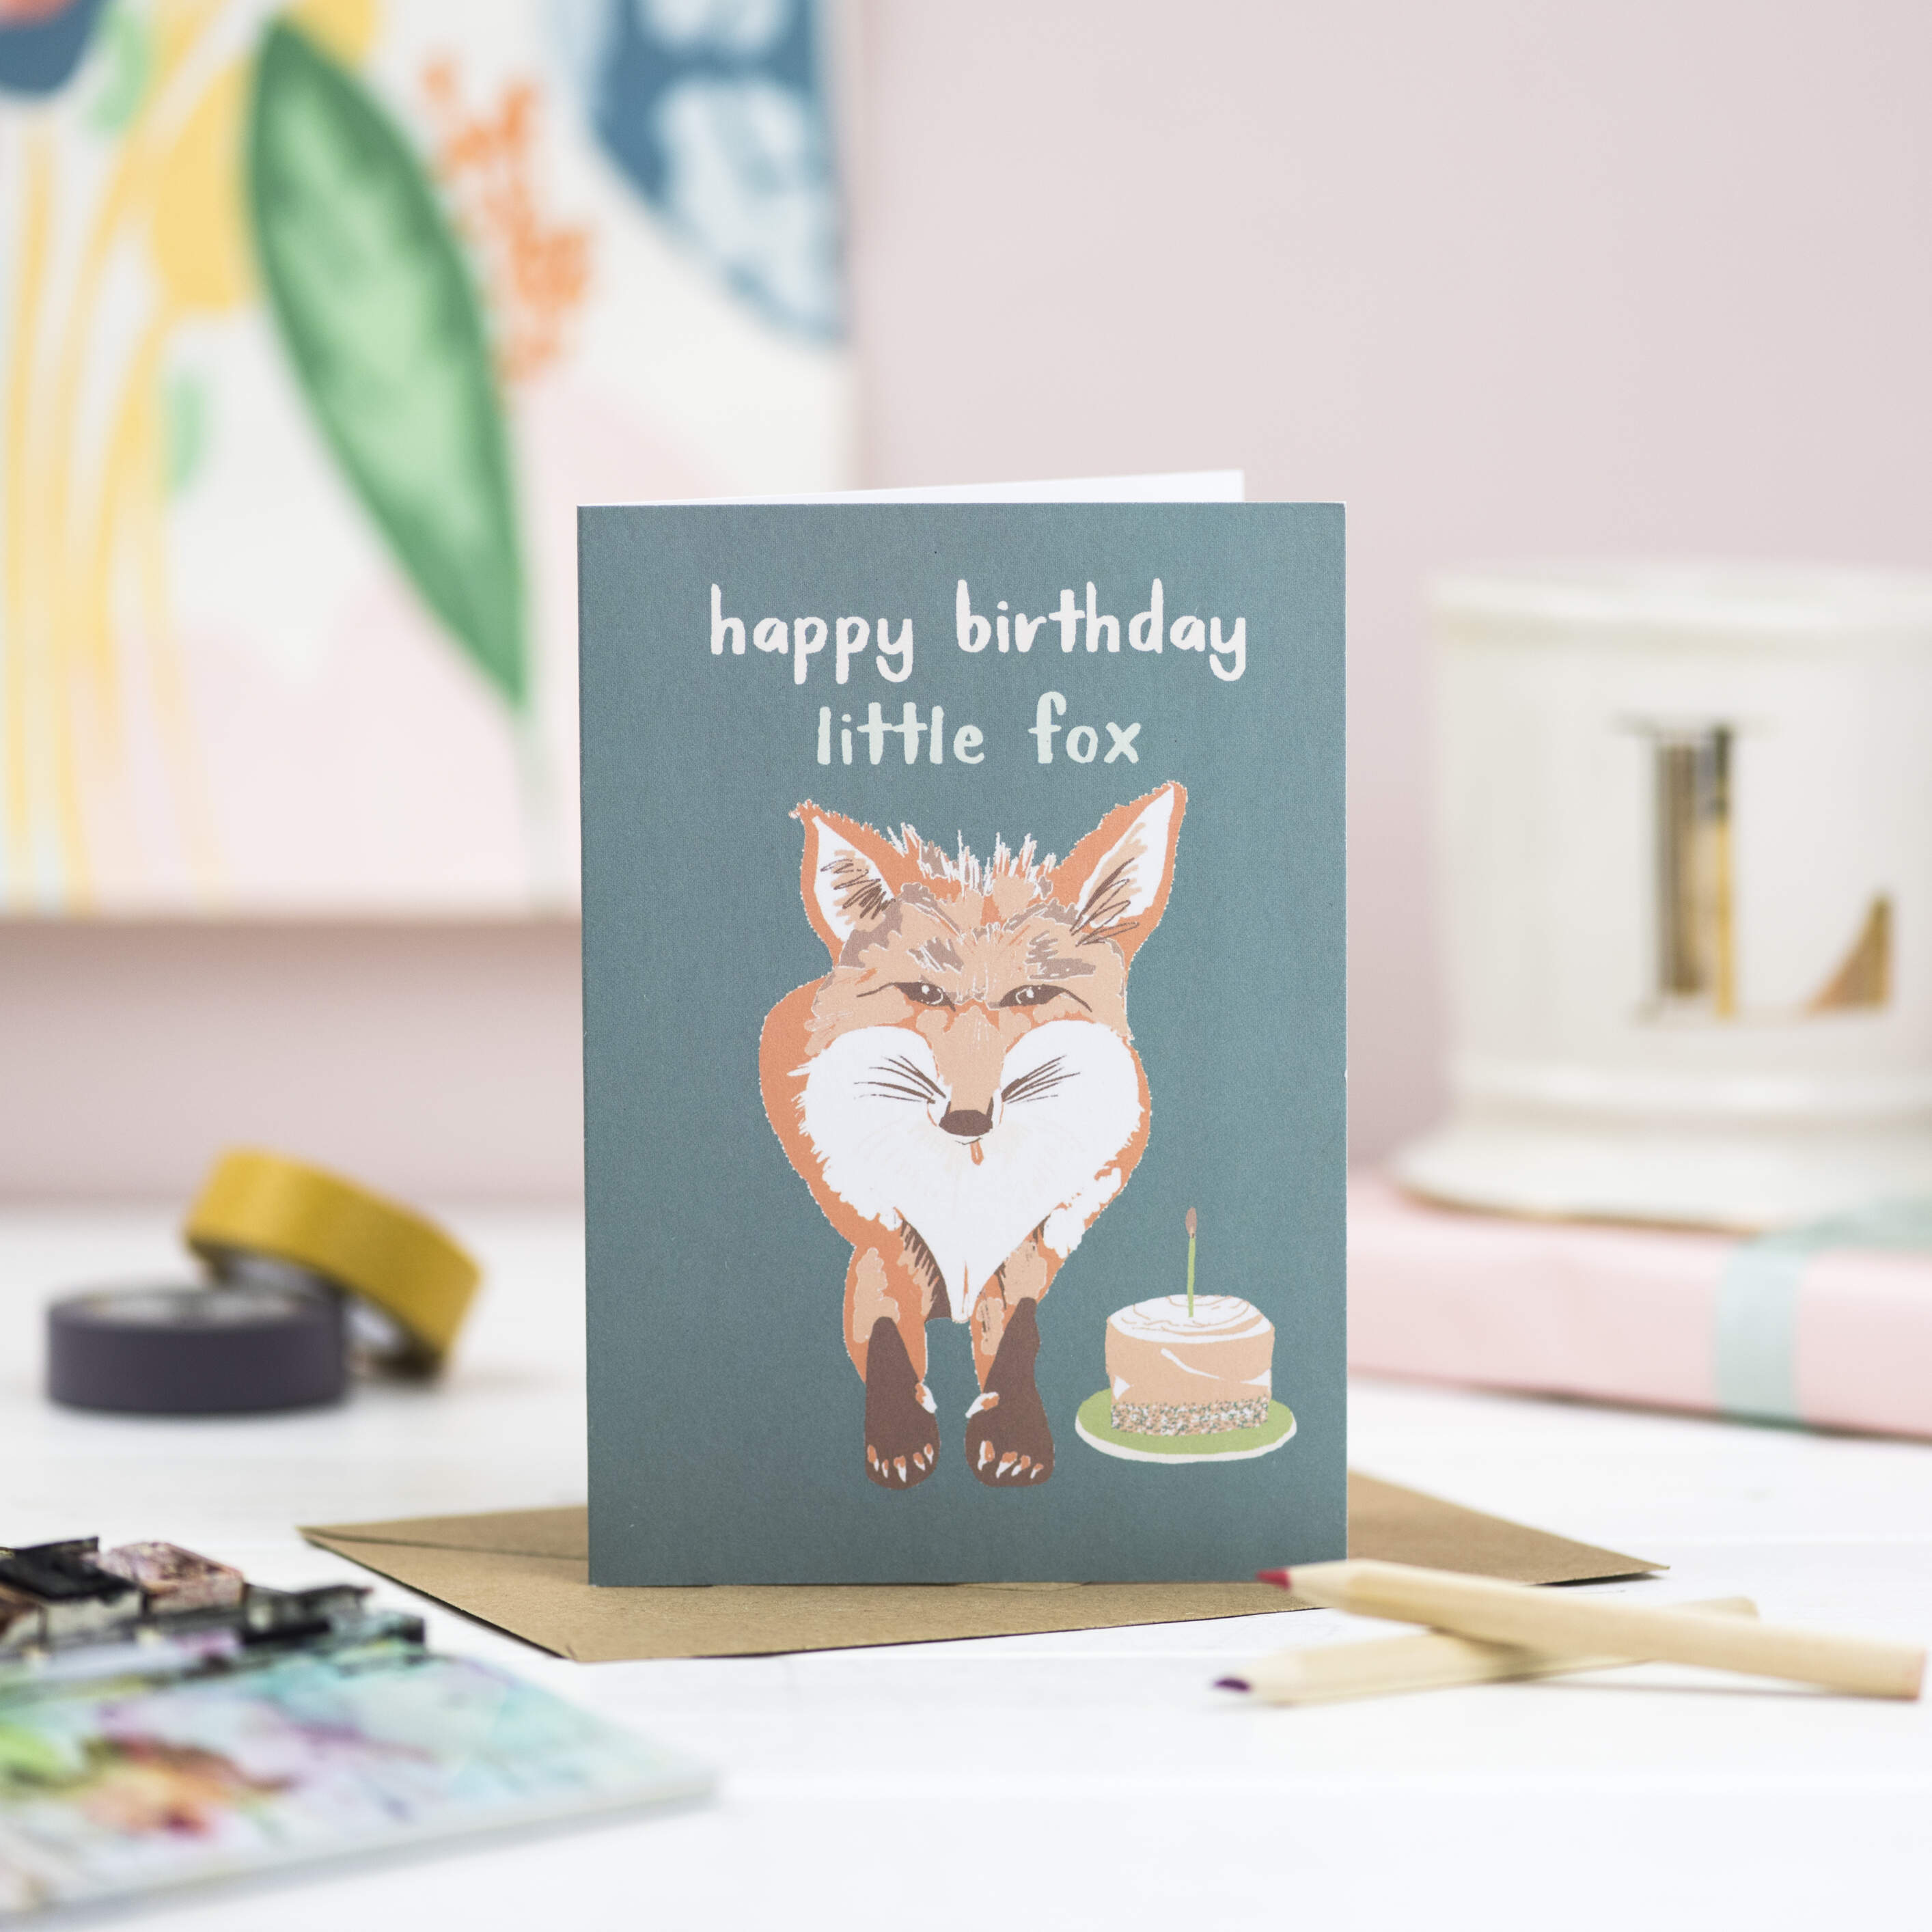 Happy Birthday little fox greetings card